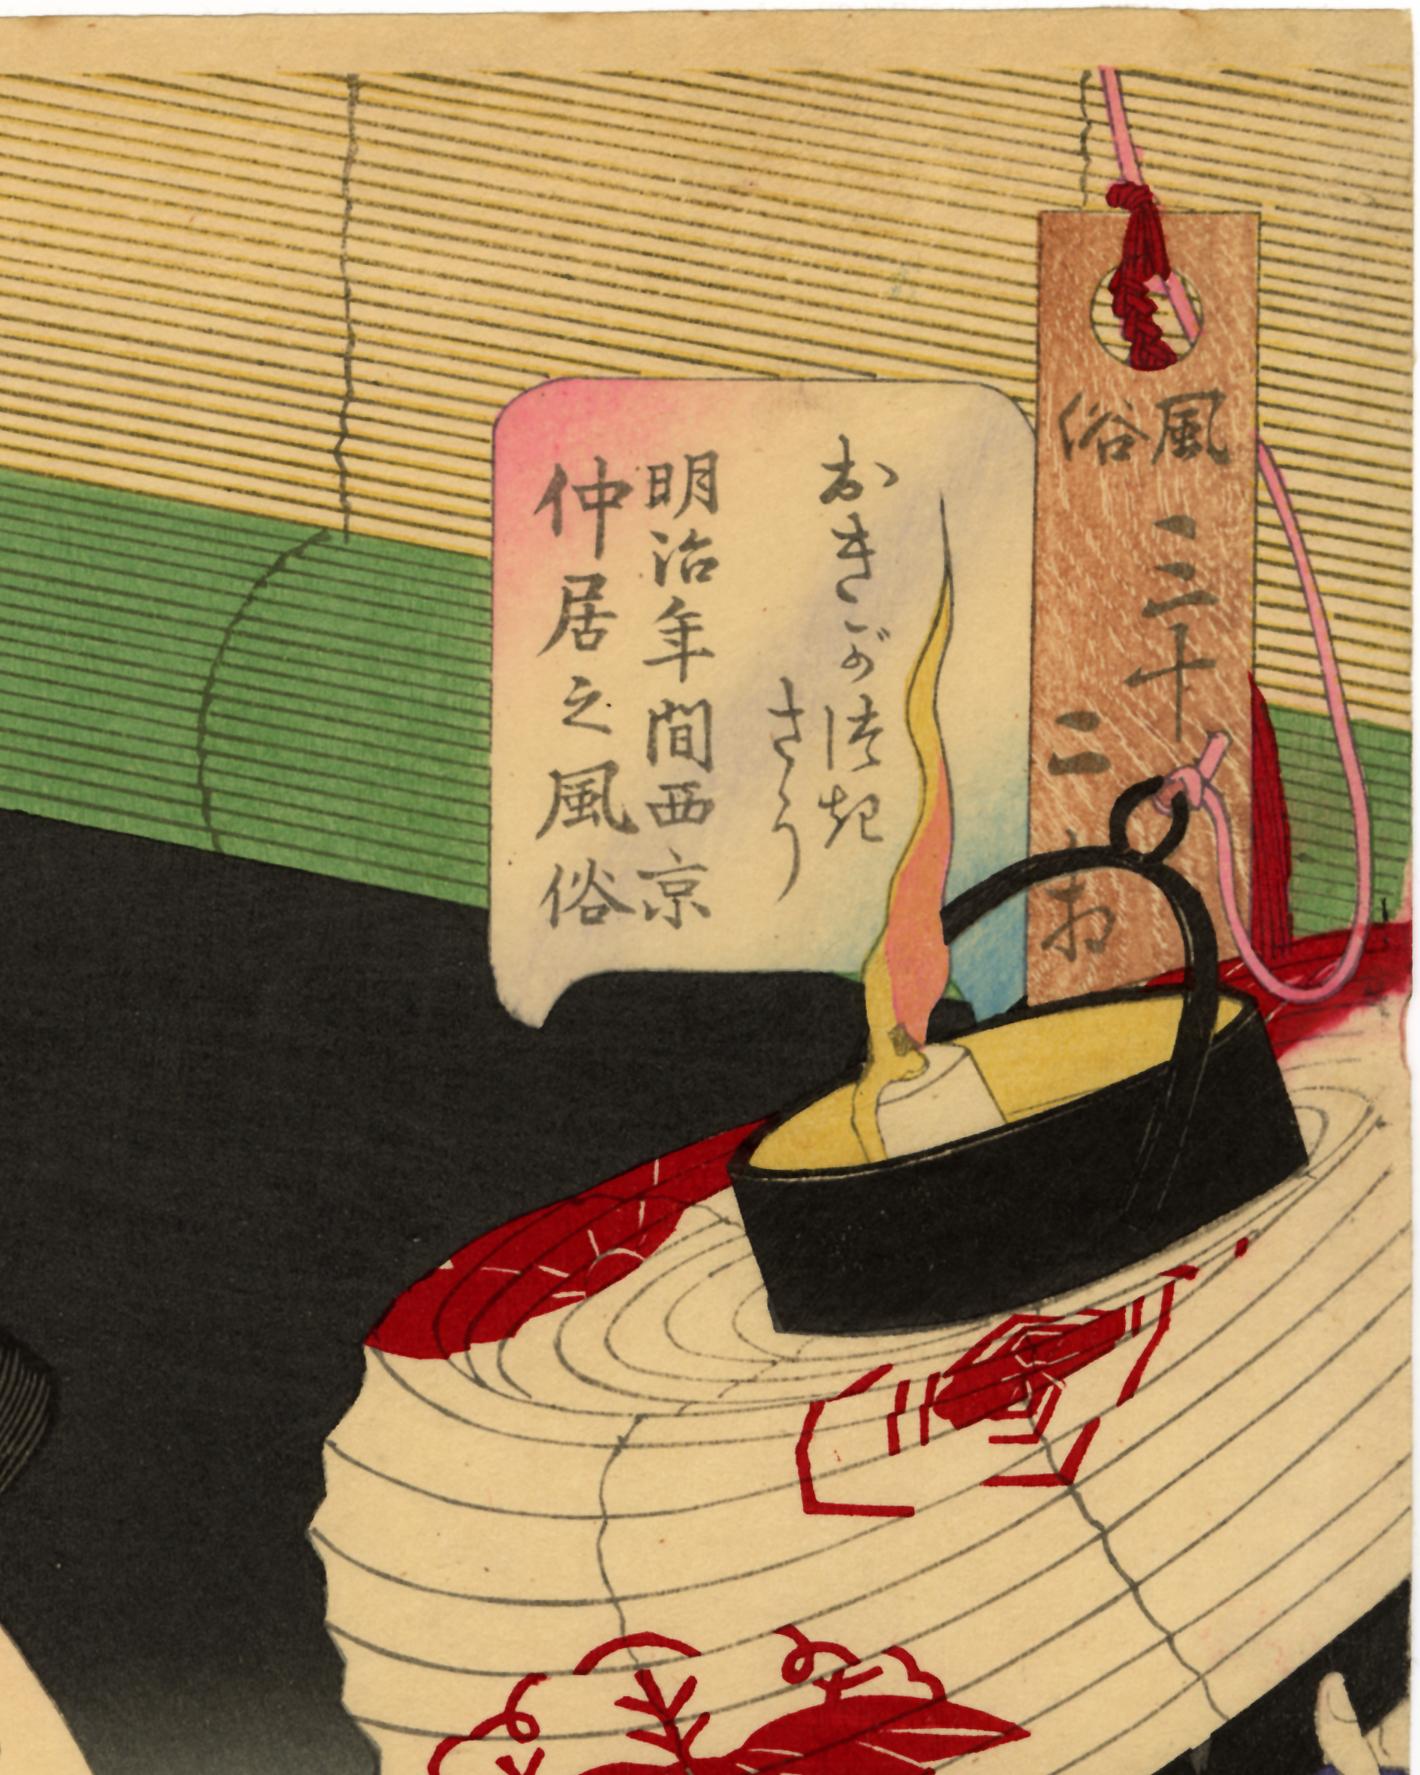 Looking Capable: A Kyoto Waitress in the Meiji Era - Print by Taiso Yoshitoshi